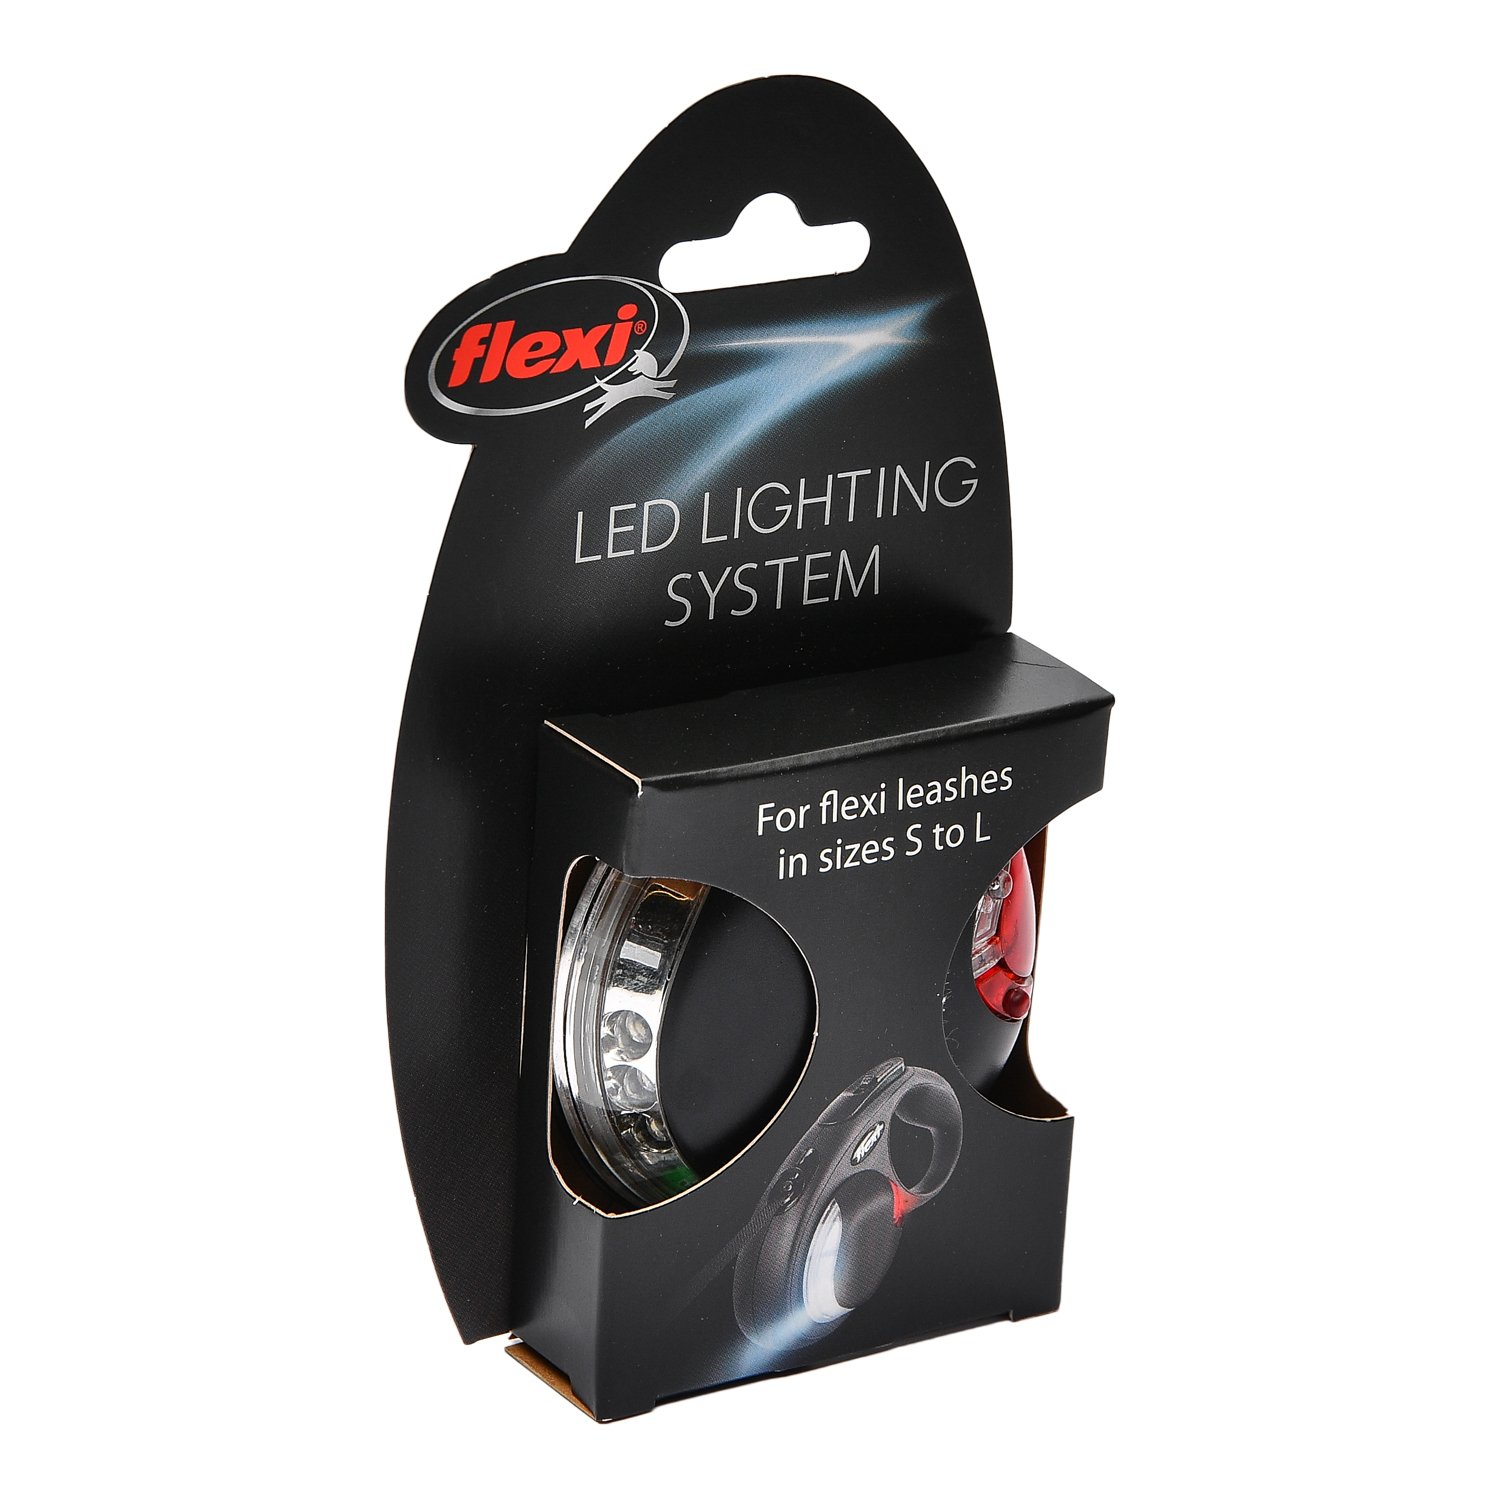 Подсветка на корпус рулетки Flexi LED Lighting Systeм Черная 20500 - фото 2